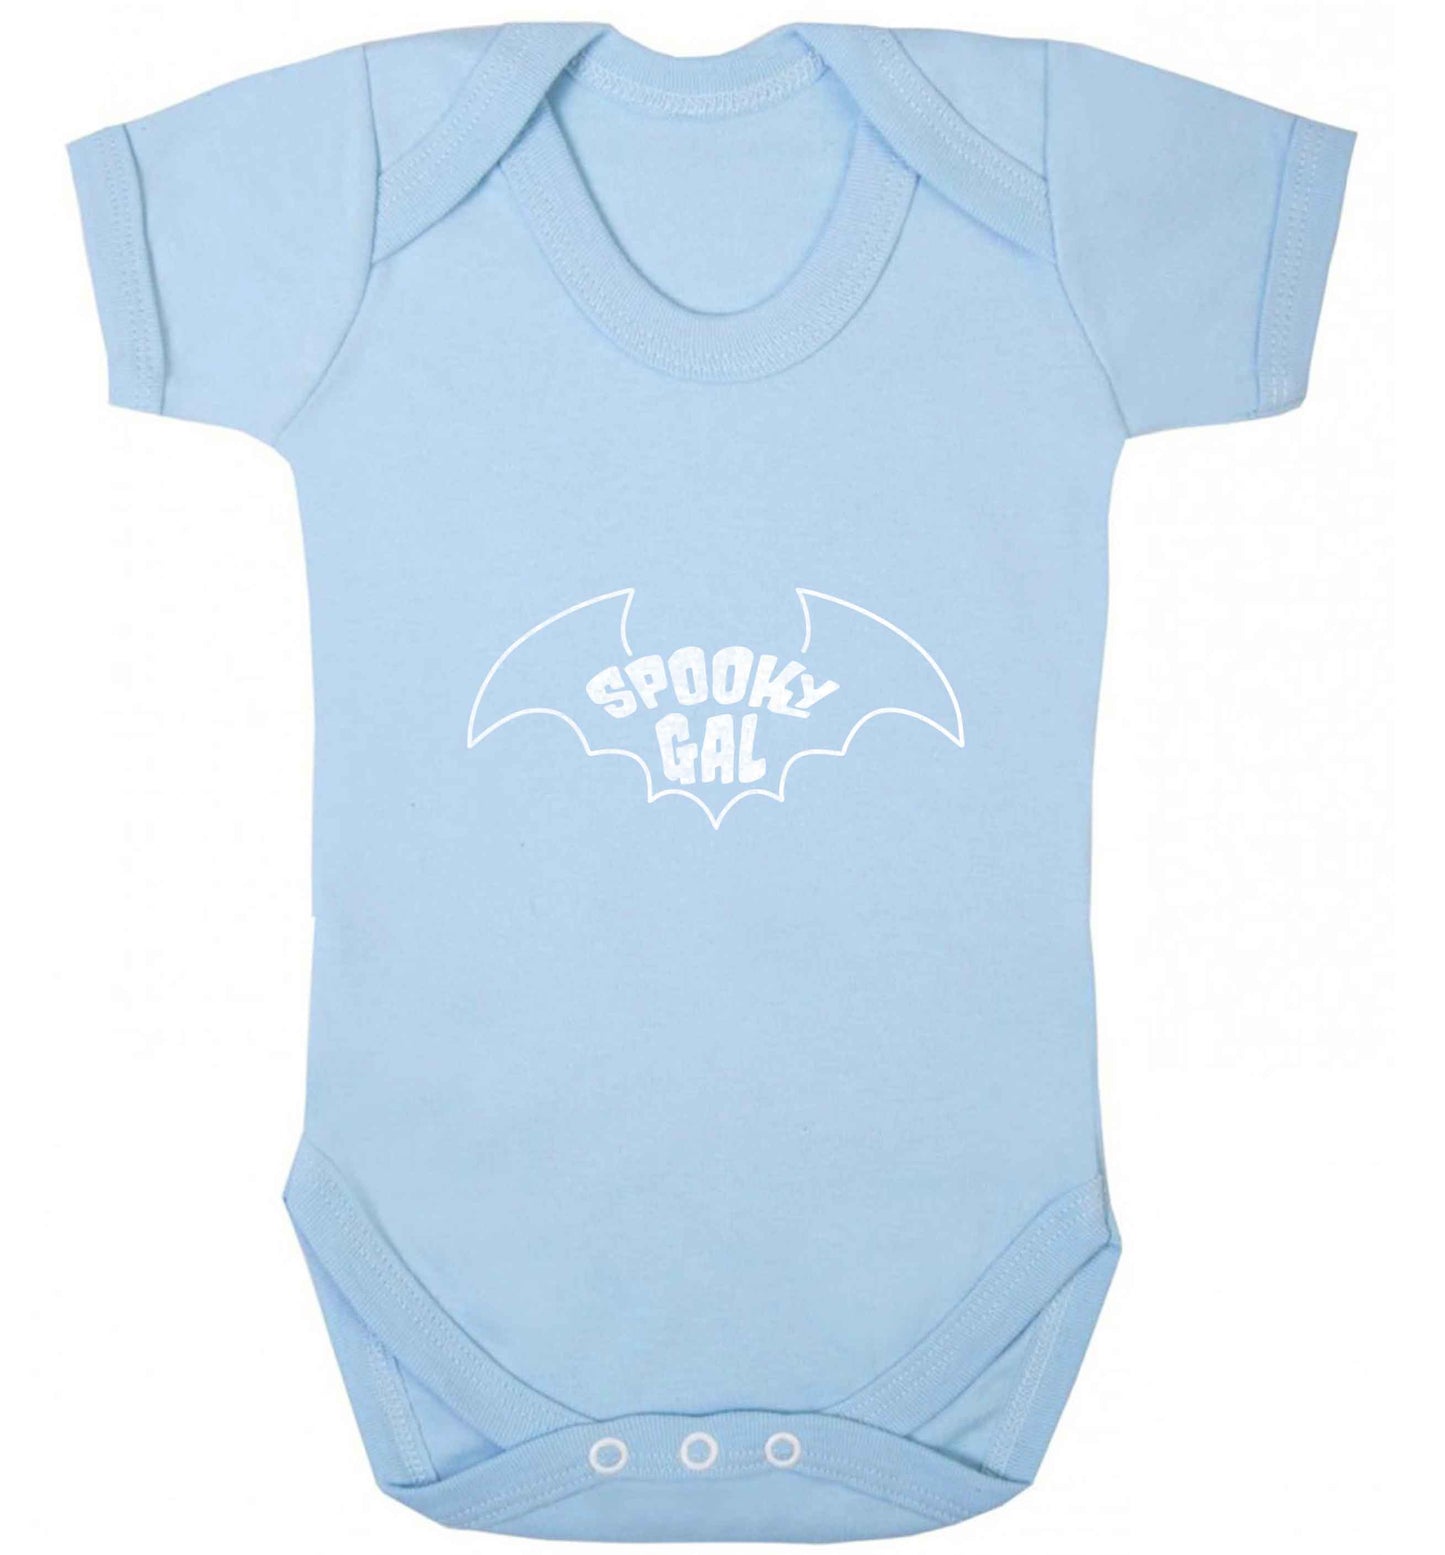 Spooky gal Kit baby vest pale blue 18-24 months